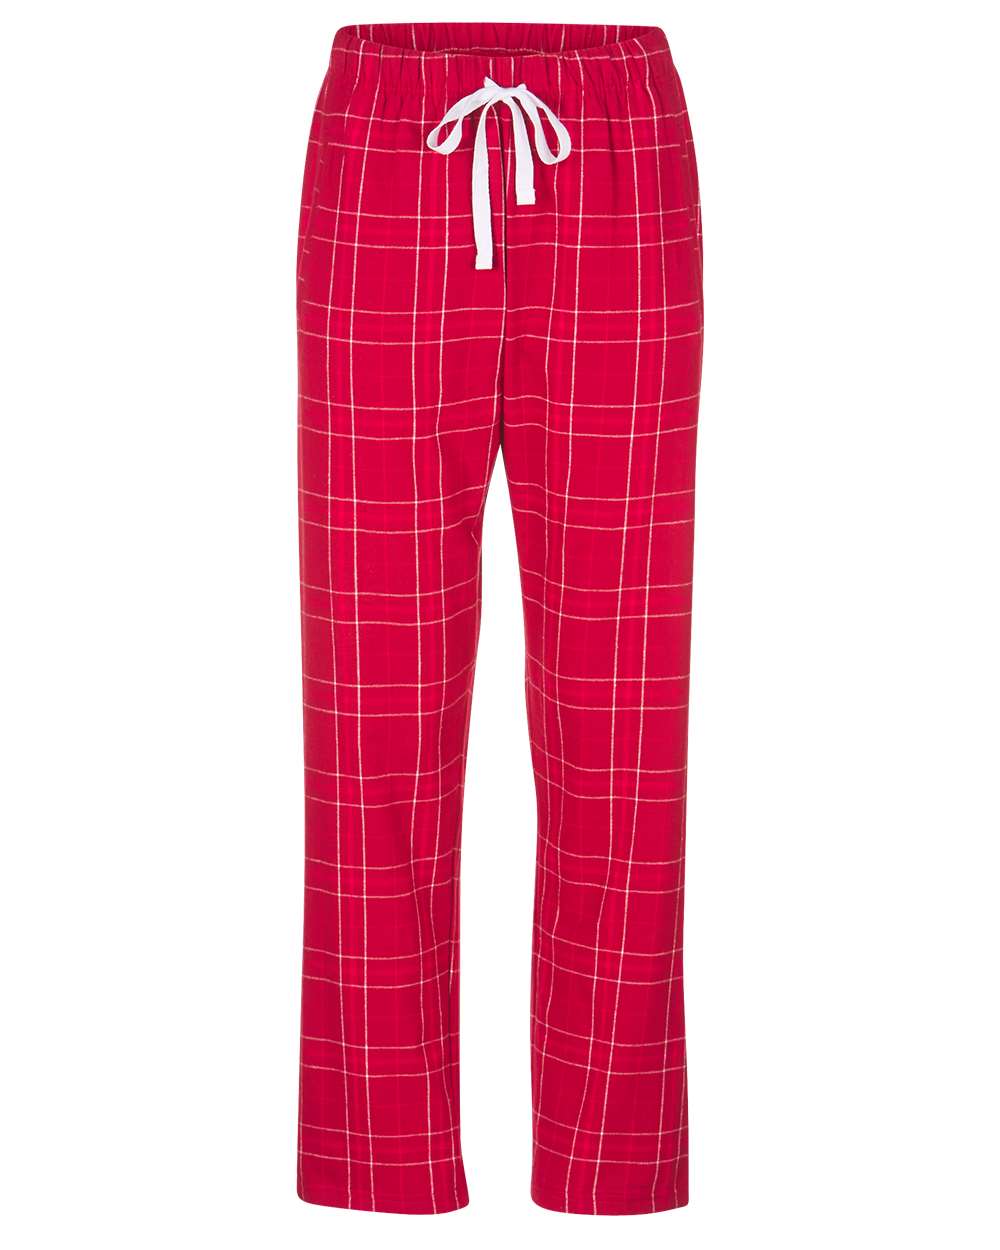 Boxercraft Women's Haley Navy/Pink Plaid Flannel Pajama Pant